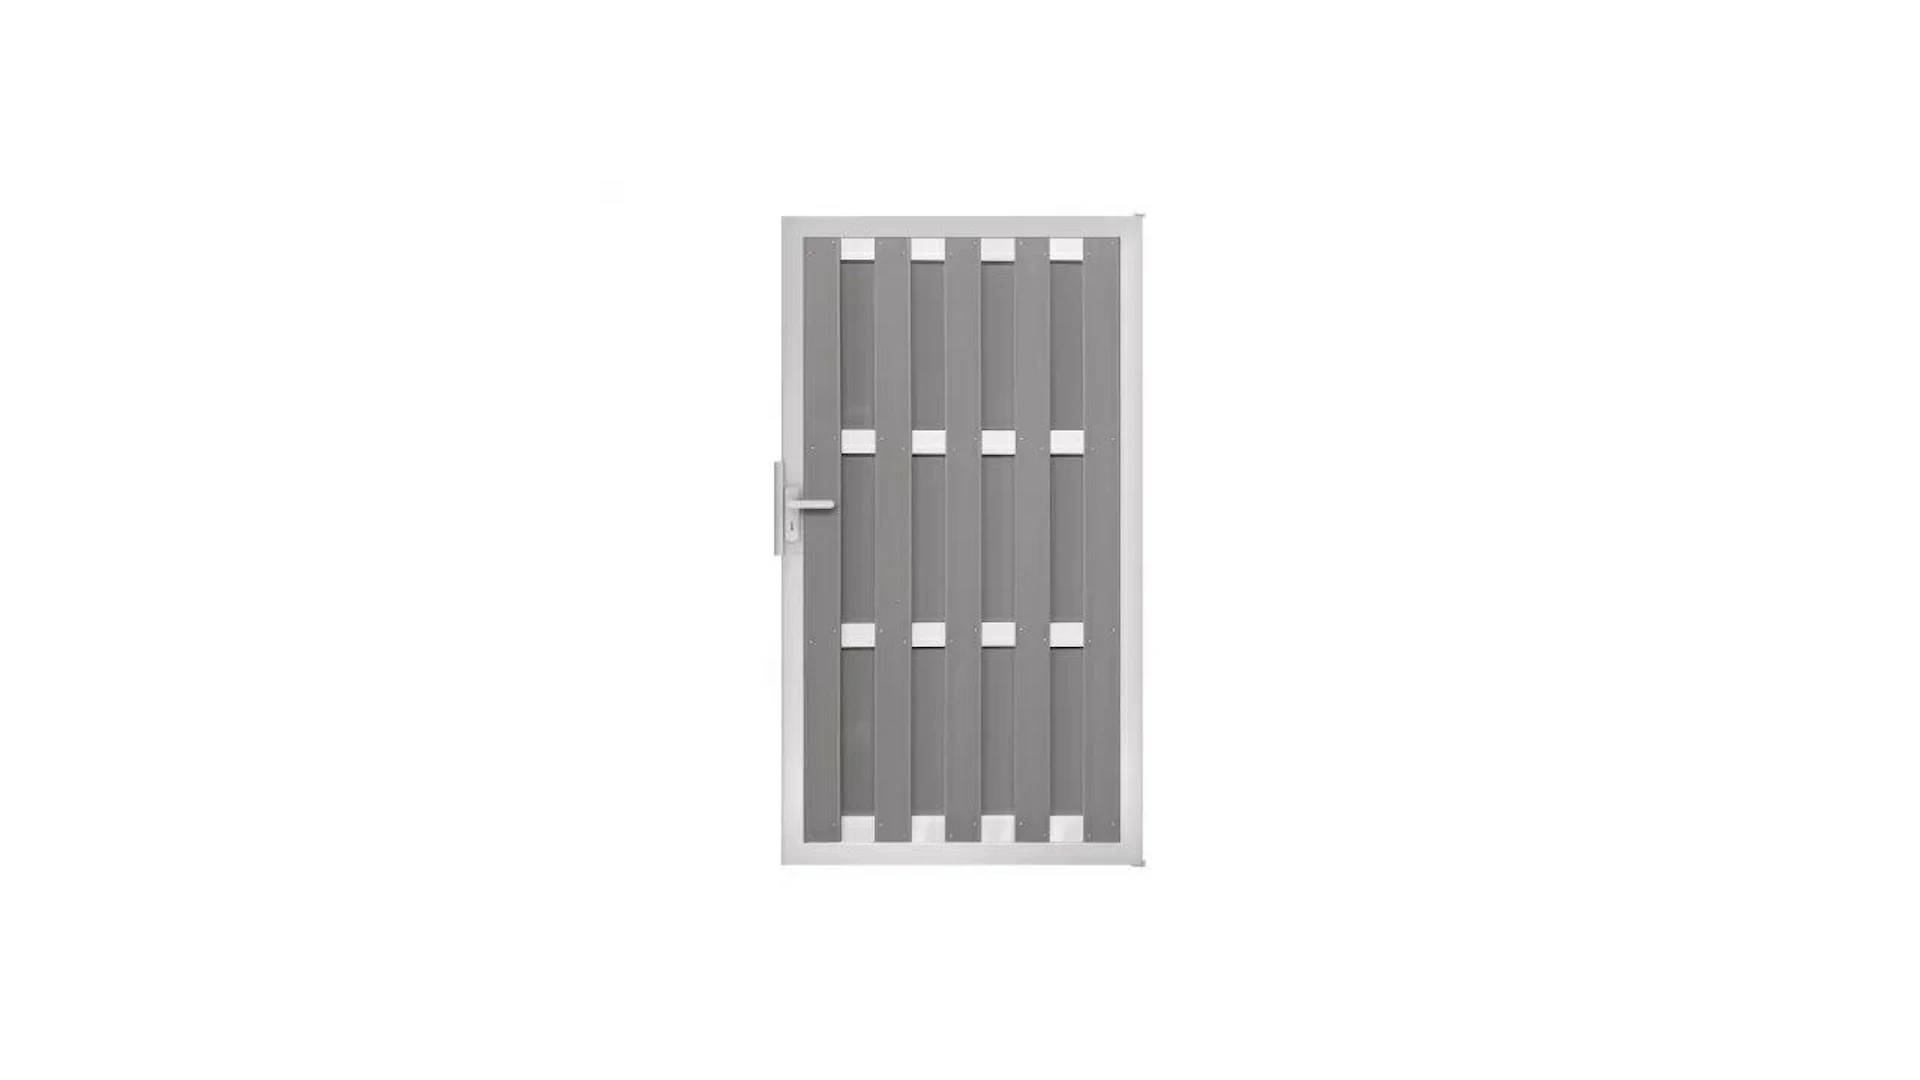 planeo prefabricated fence gate DIN right light grey 100 x 180 x 4.0cm - frame silver